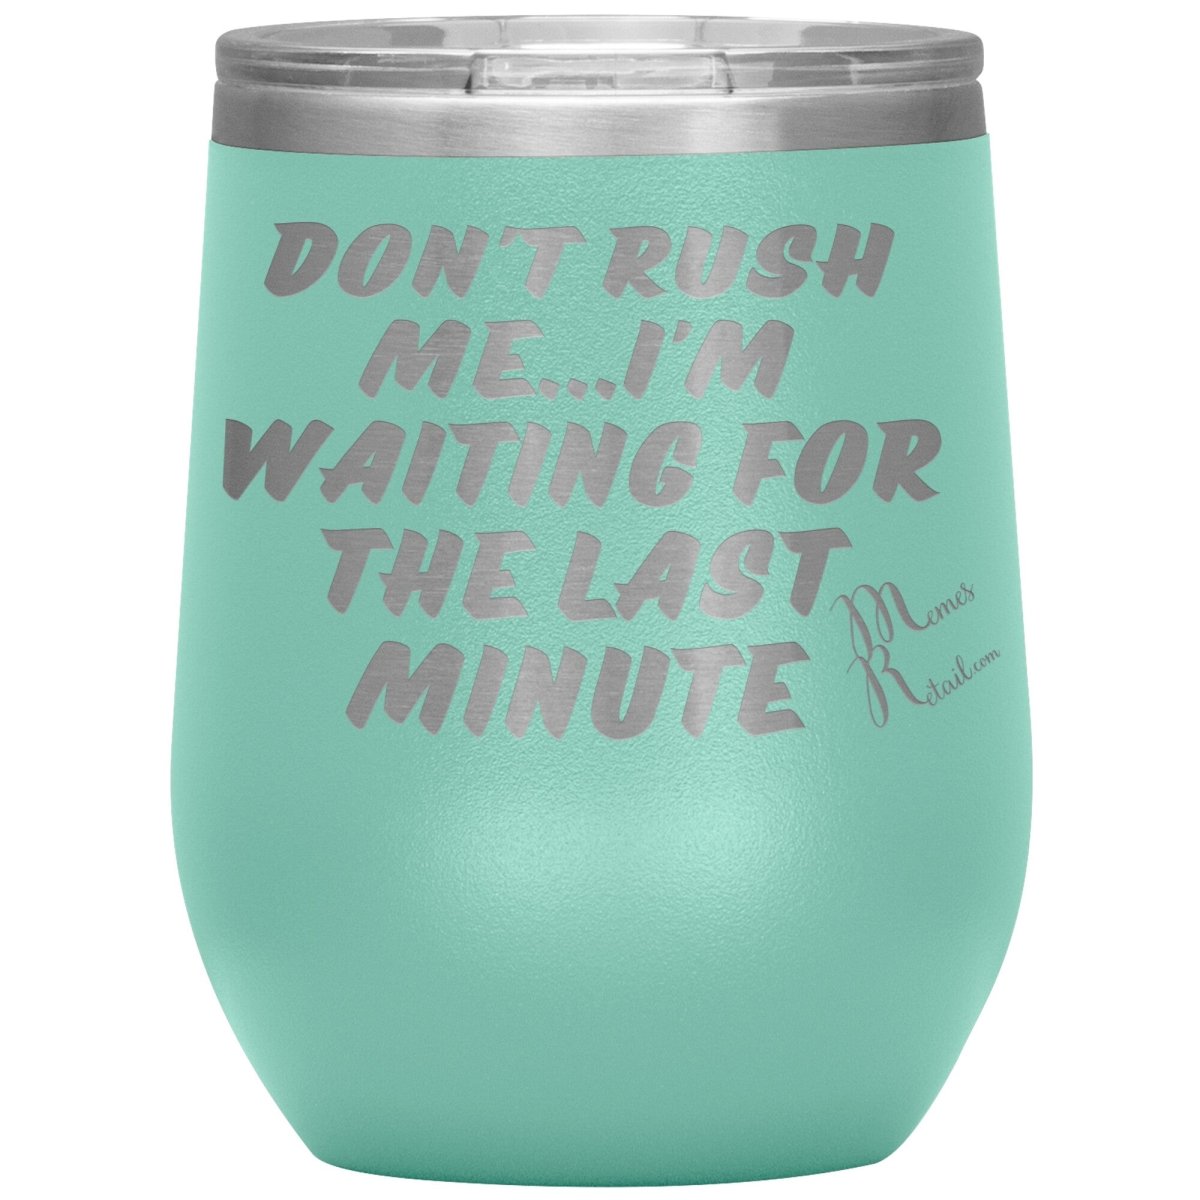 Don't Rush Me... I'm Waiting For The Last Minute Tumbers, 12oz Wine Insulated Tumbler / Teal - MemesRetail.com